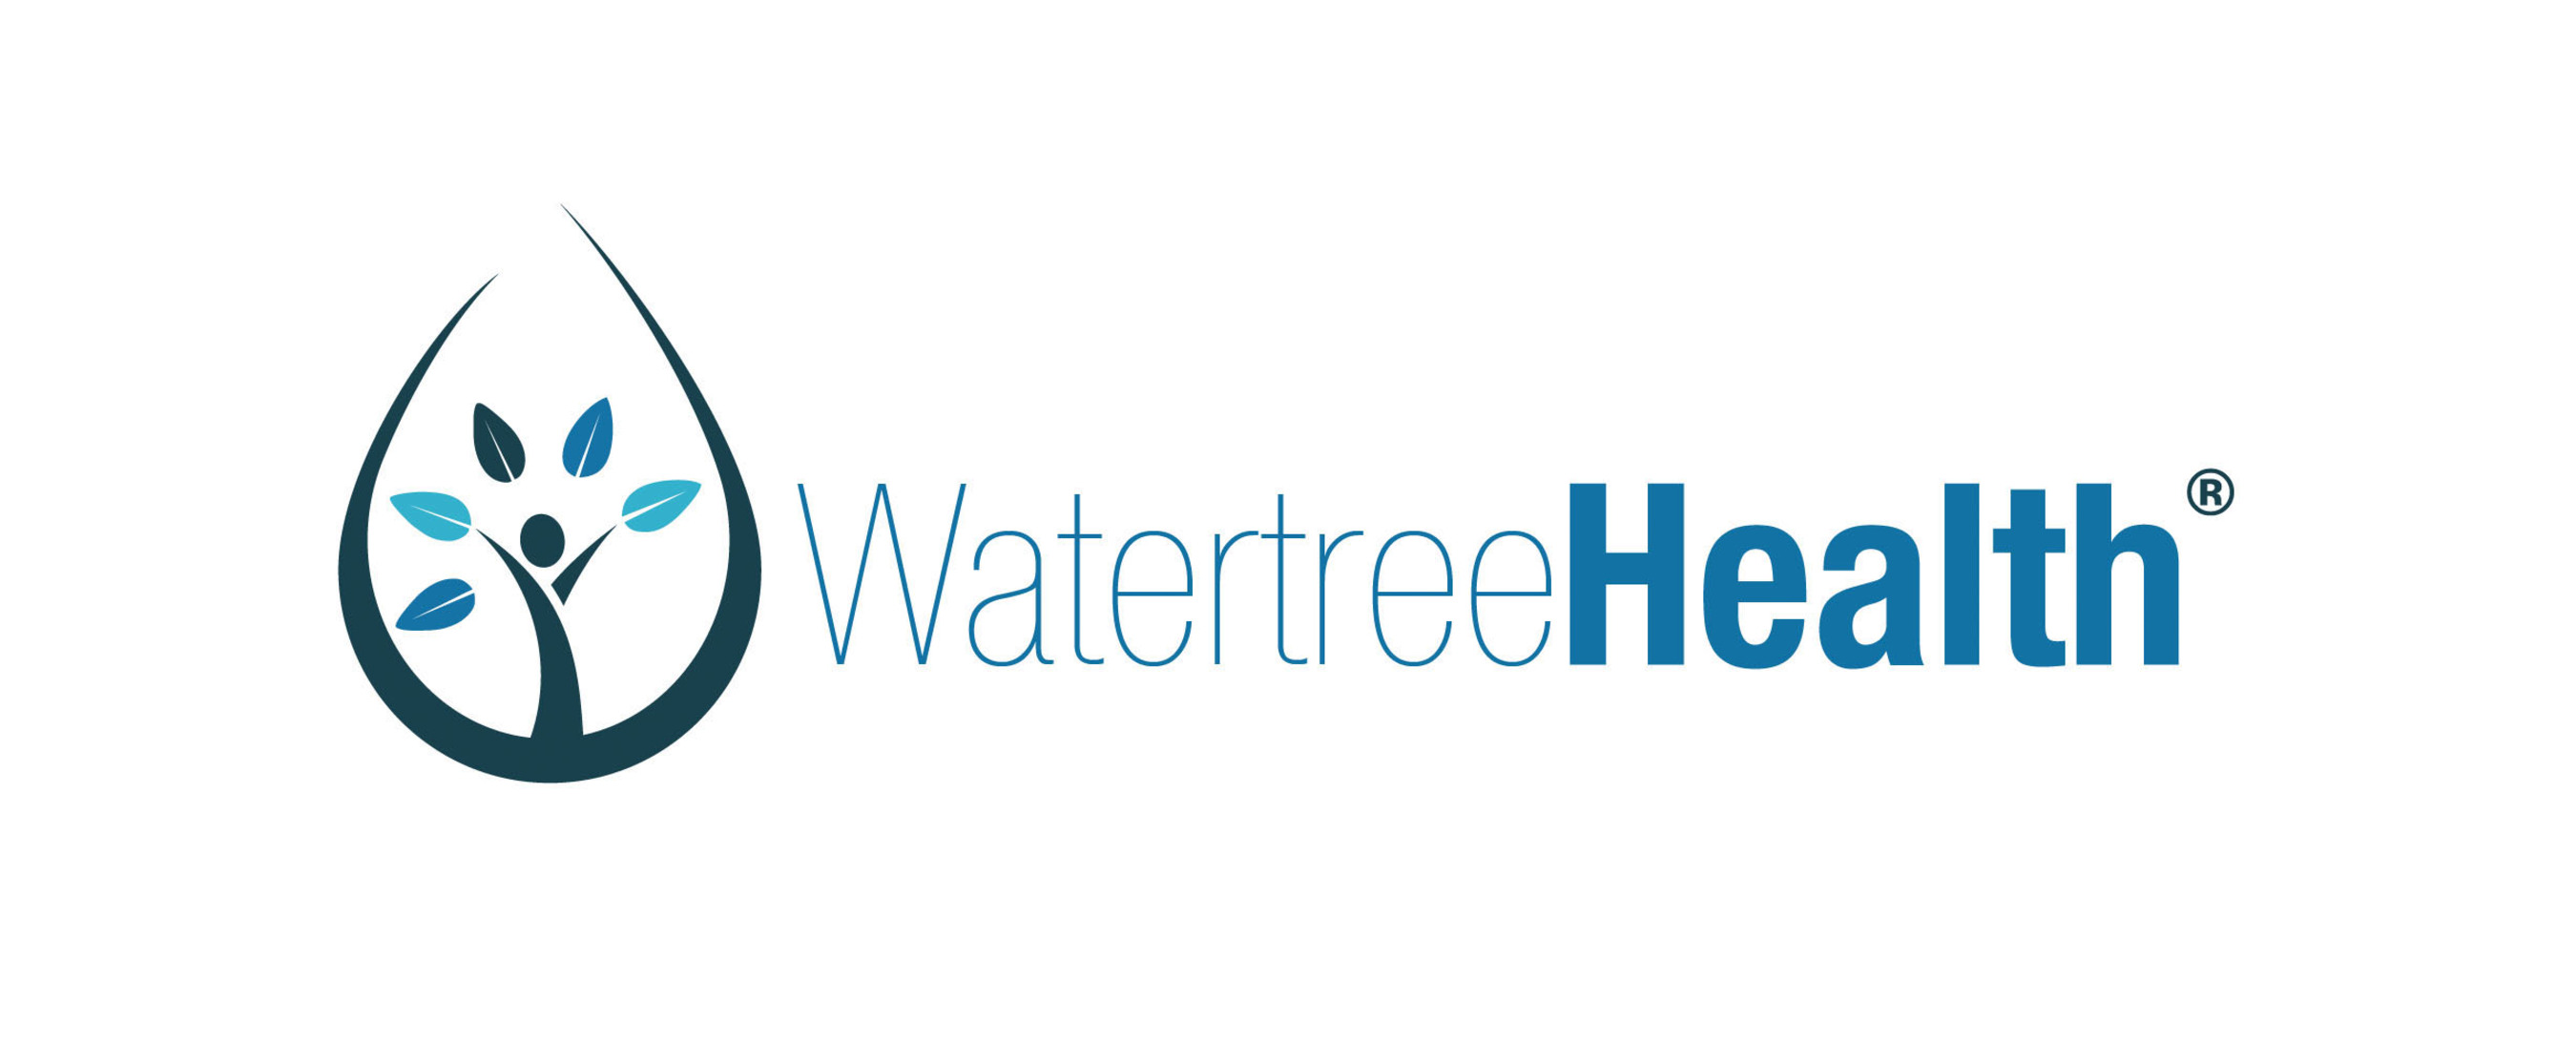 Watertree Health logo. (PRNewsFoto/Watertree Health) (PRNewsFoto/)